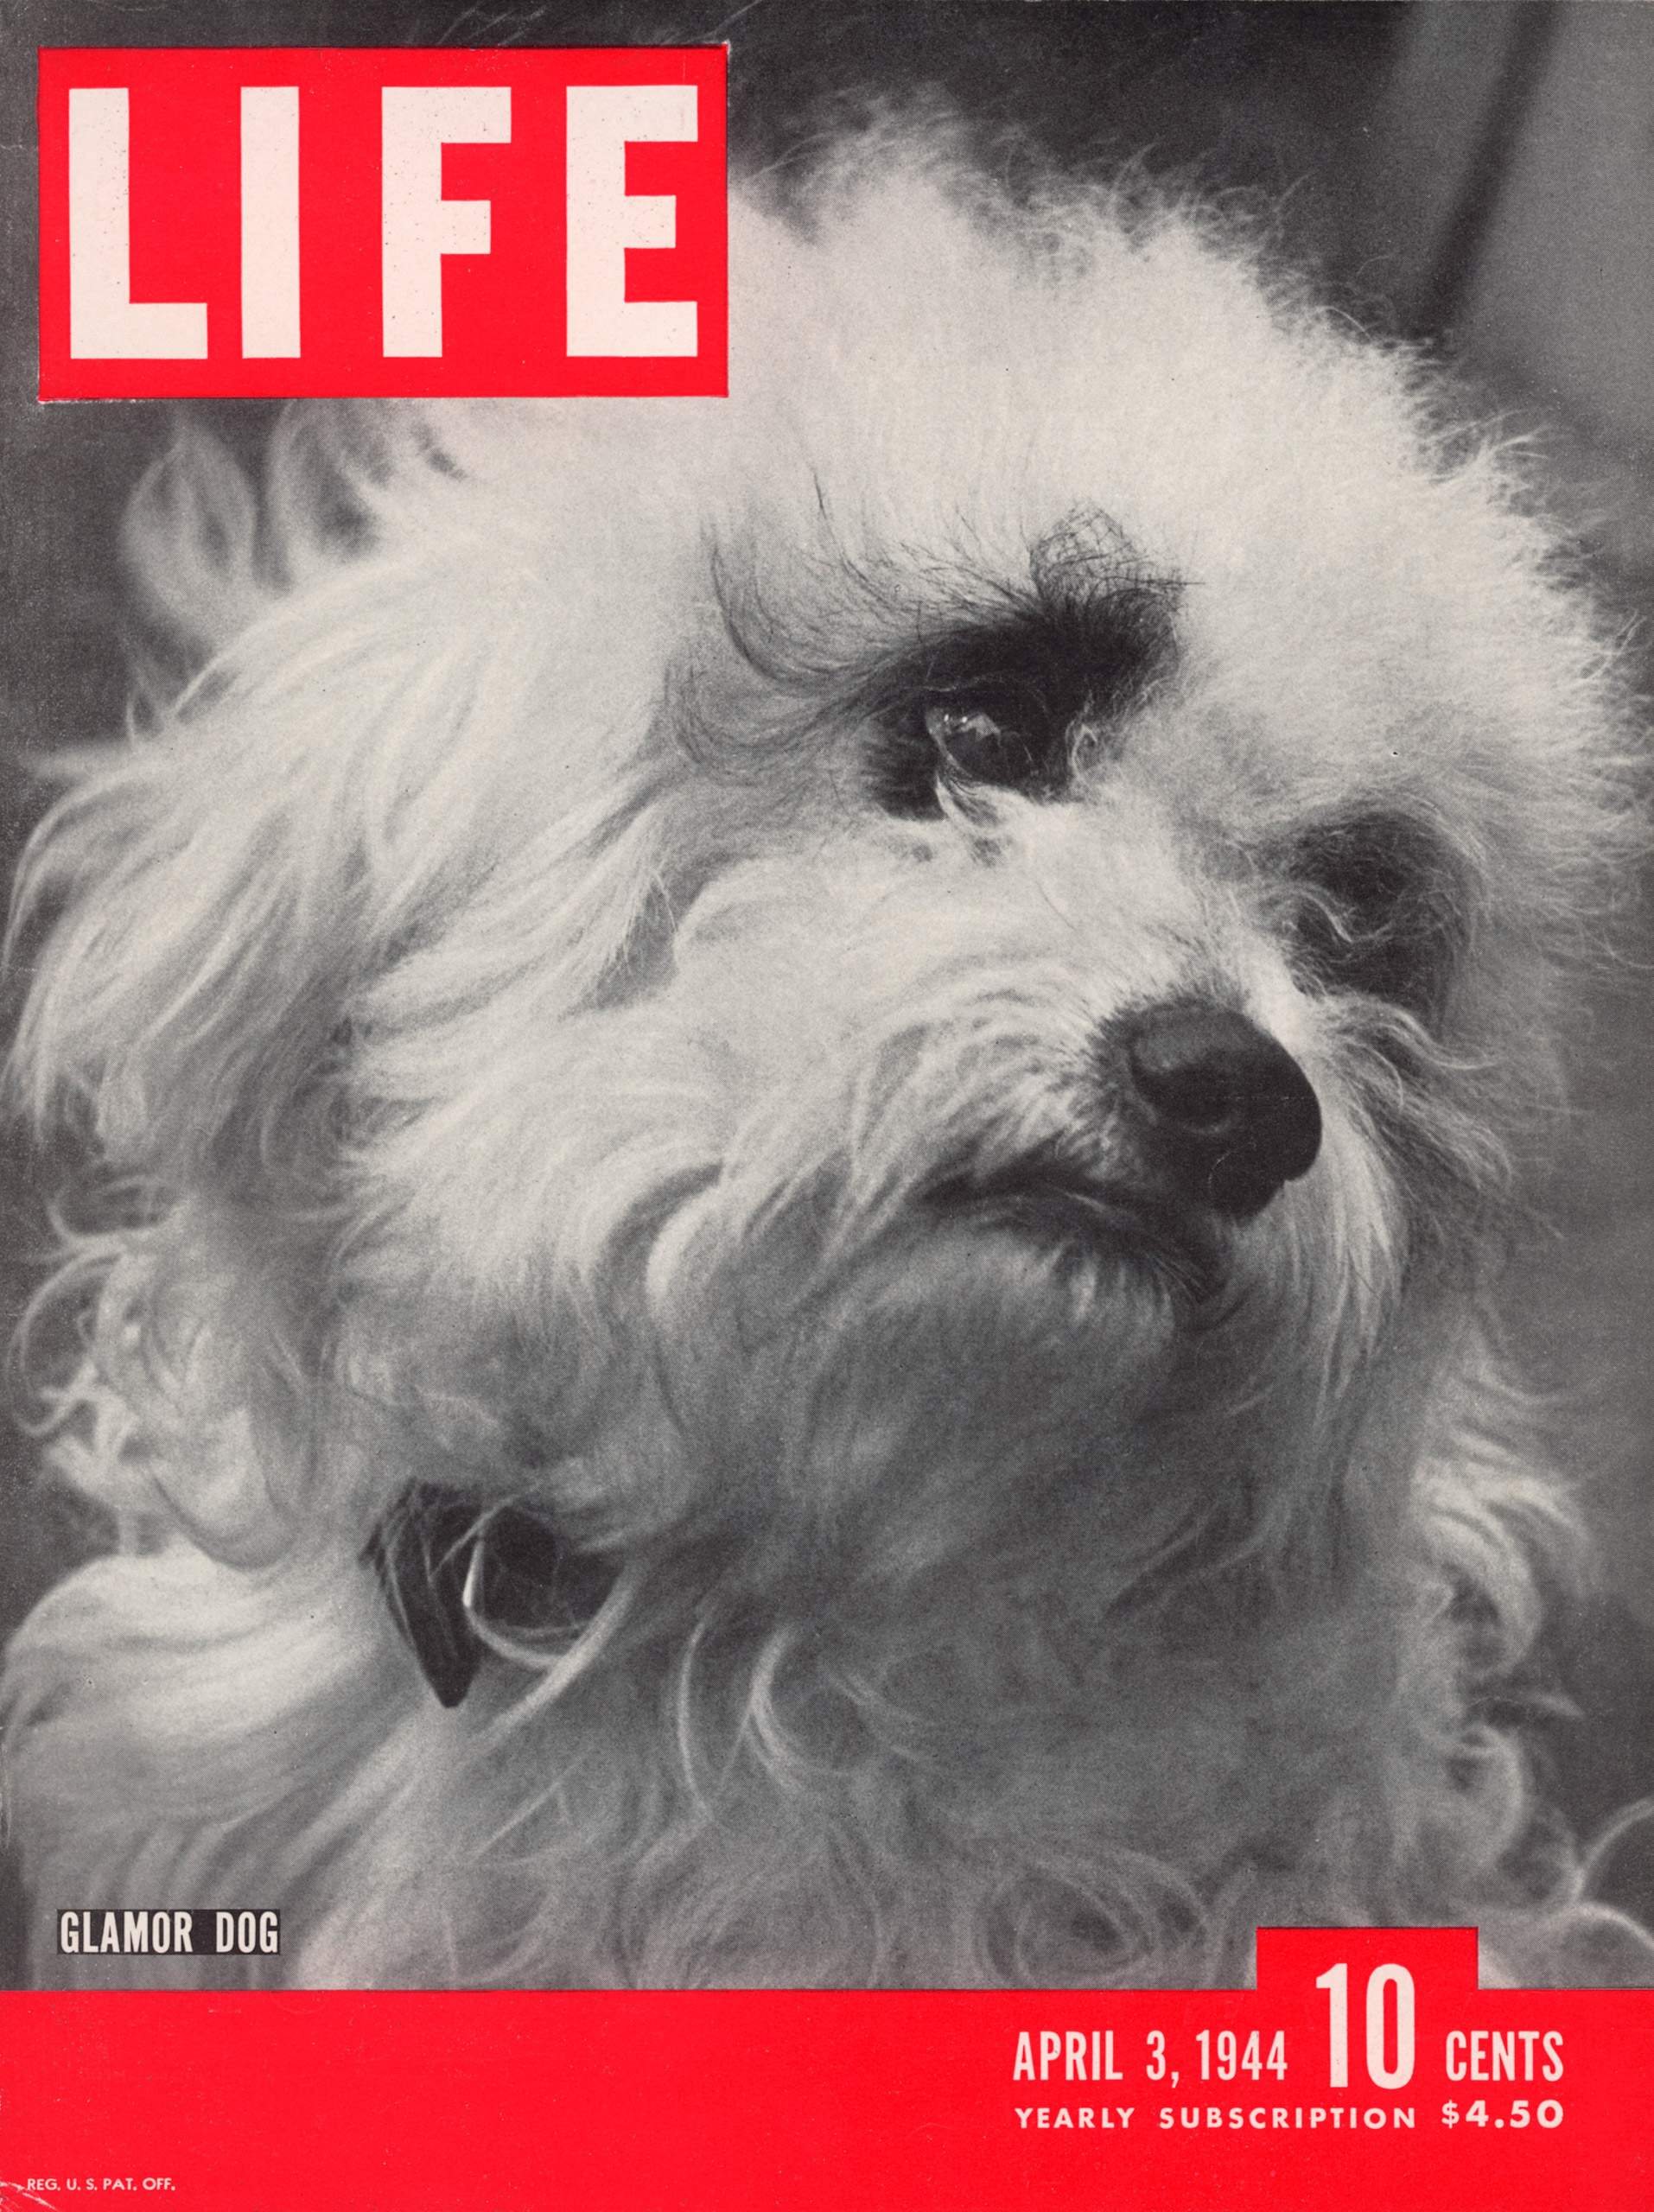 April 3, 1944 LIFE Magazine cover